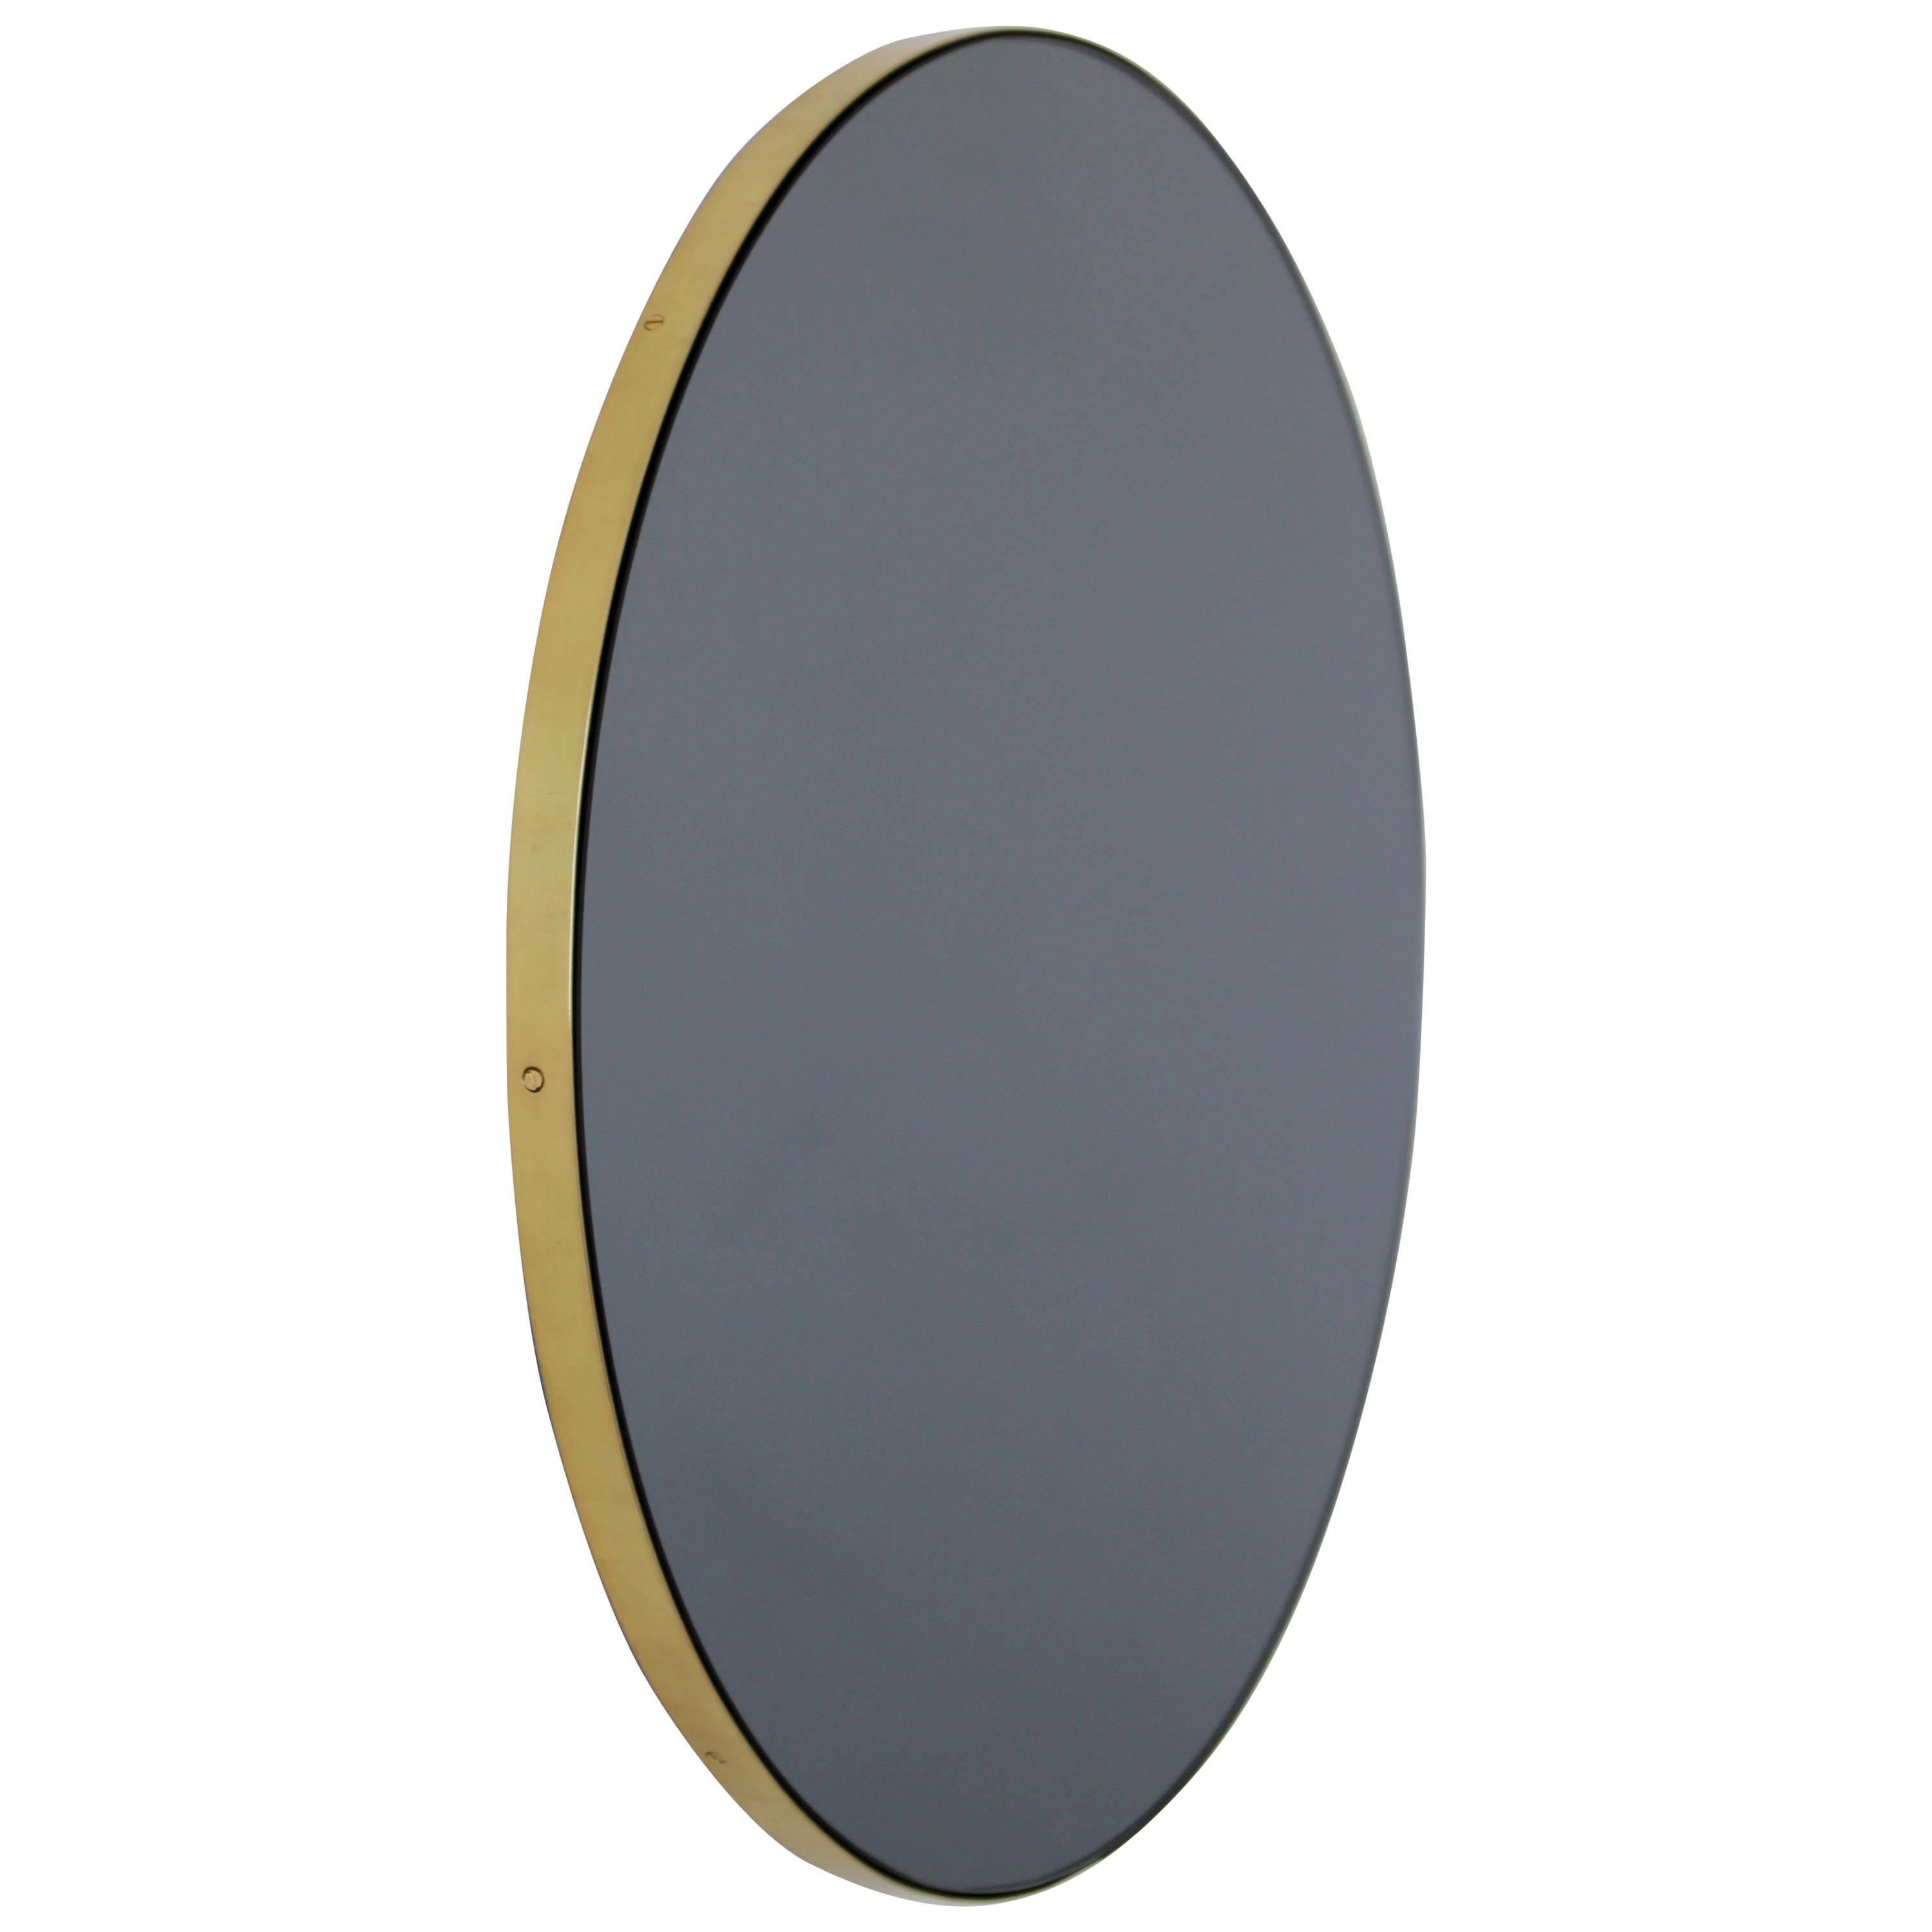 Orbis Black Tinted Round Contemporary Mirror with a Brass Frame, Medium (Miroir contemporain rond teinté noir avec cadre en laiton)